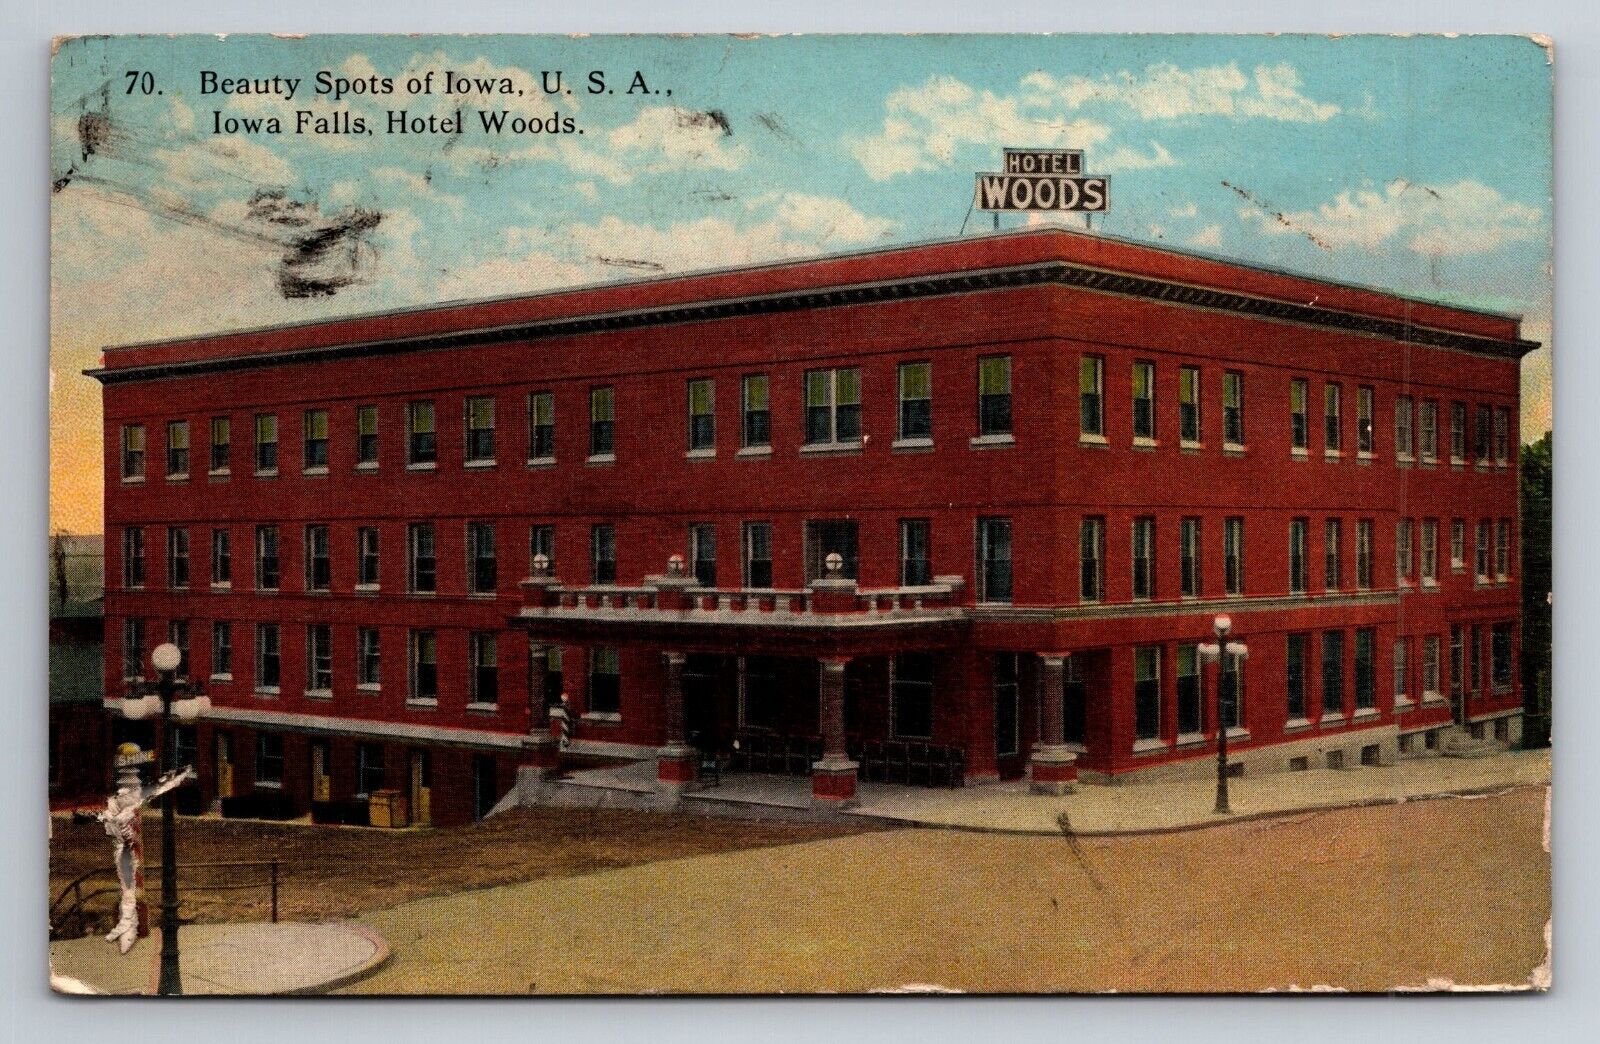 Beauty Spots Of Iowa Hotel Woods in Iowa Falls Posted 1930 Postcard